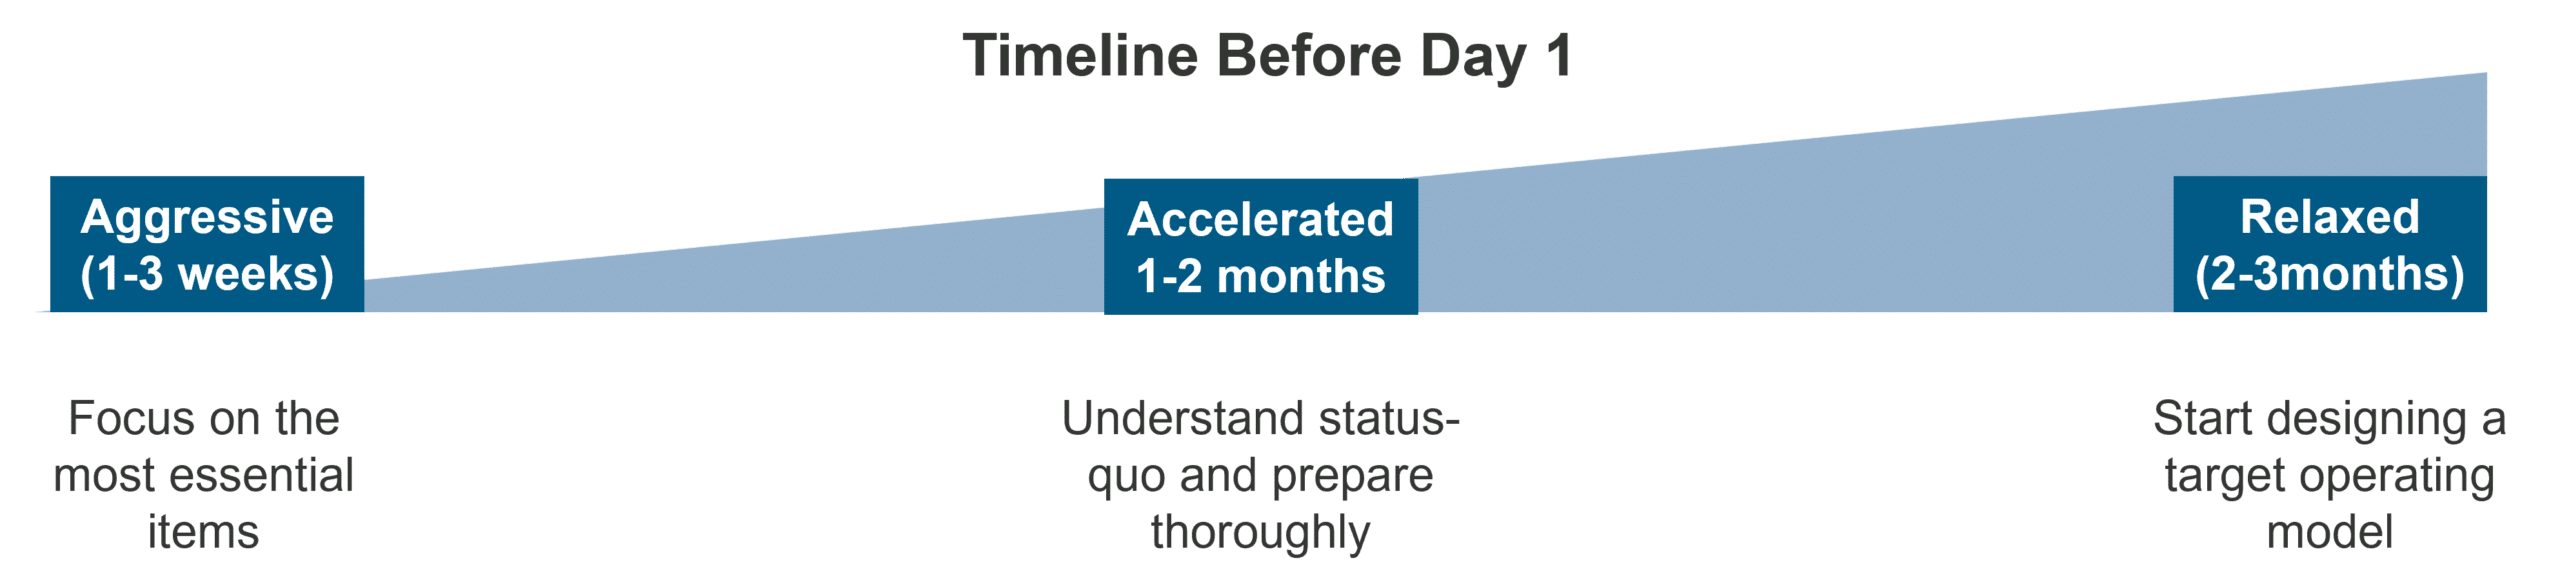 Post-Merger Integration Timeline Before Day 1